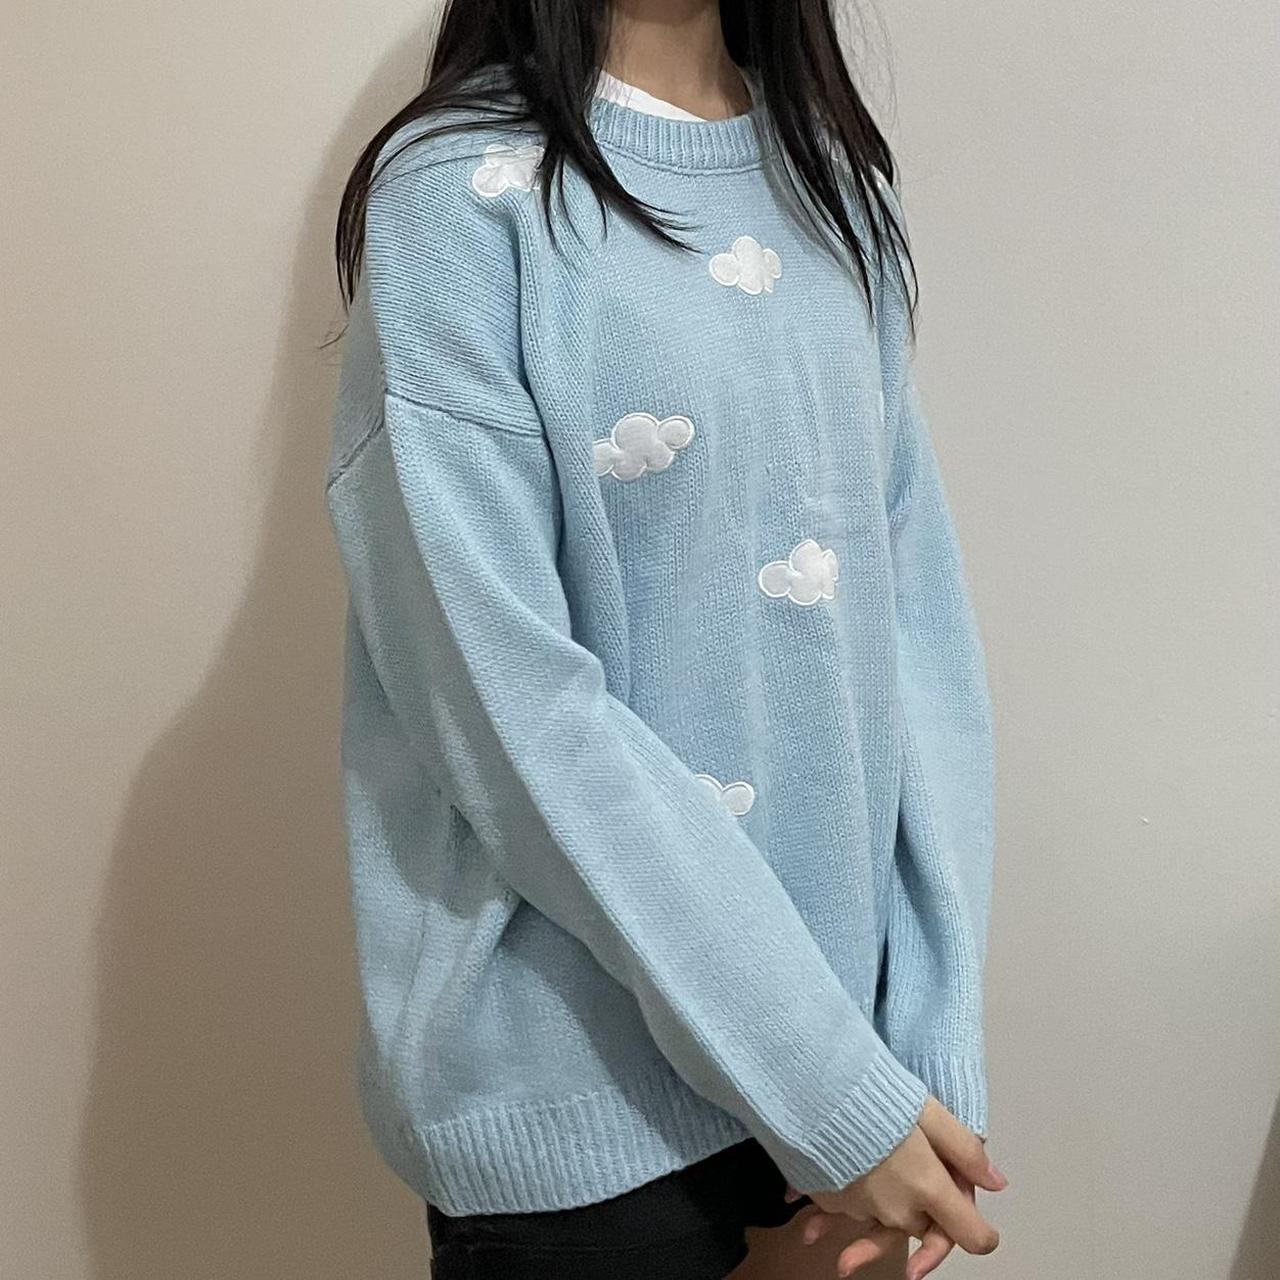 Oversize blue cloud sweater, -cute cloud pattern